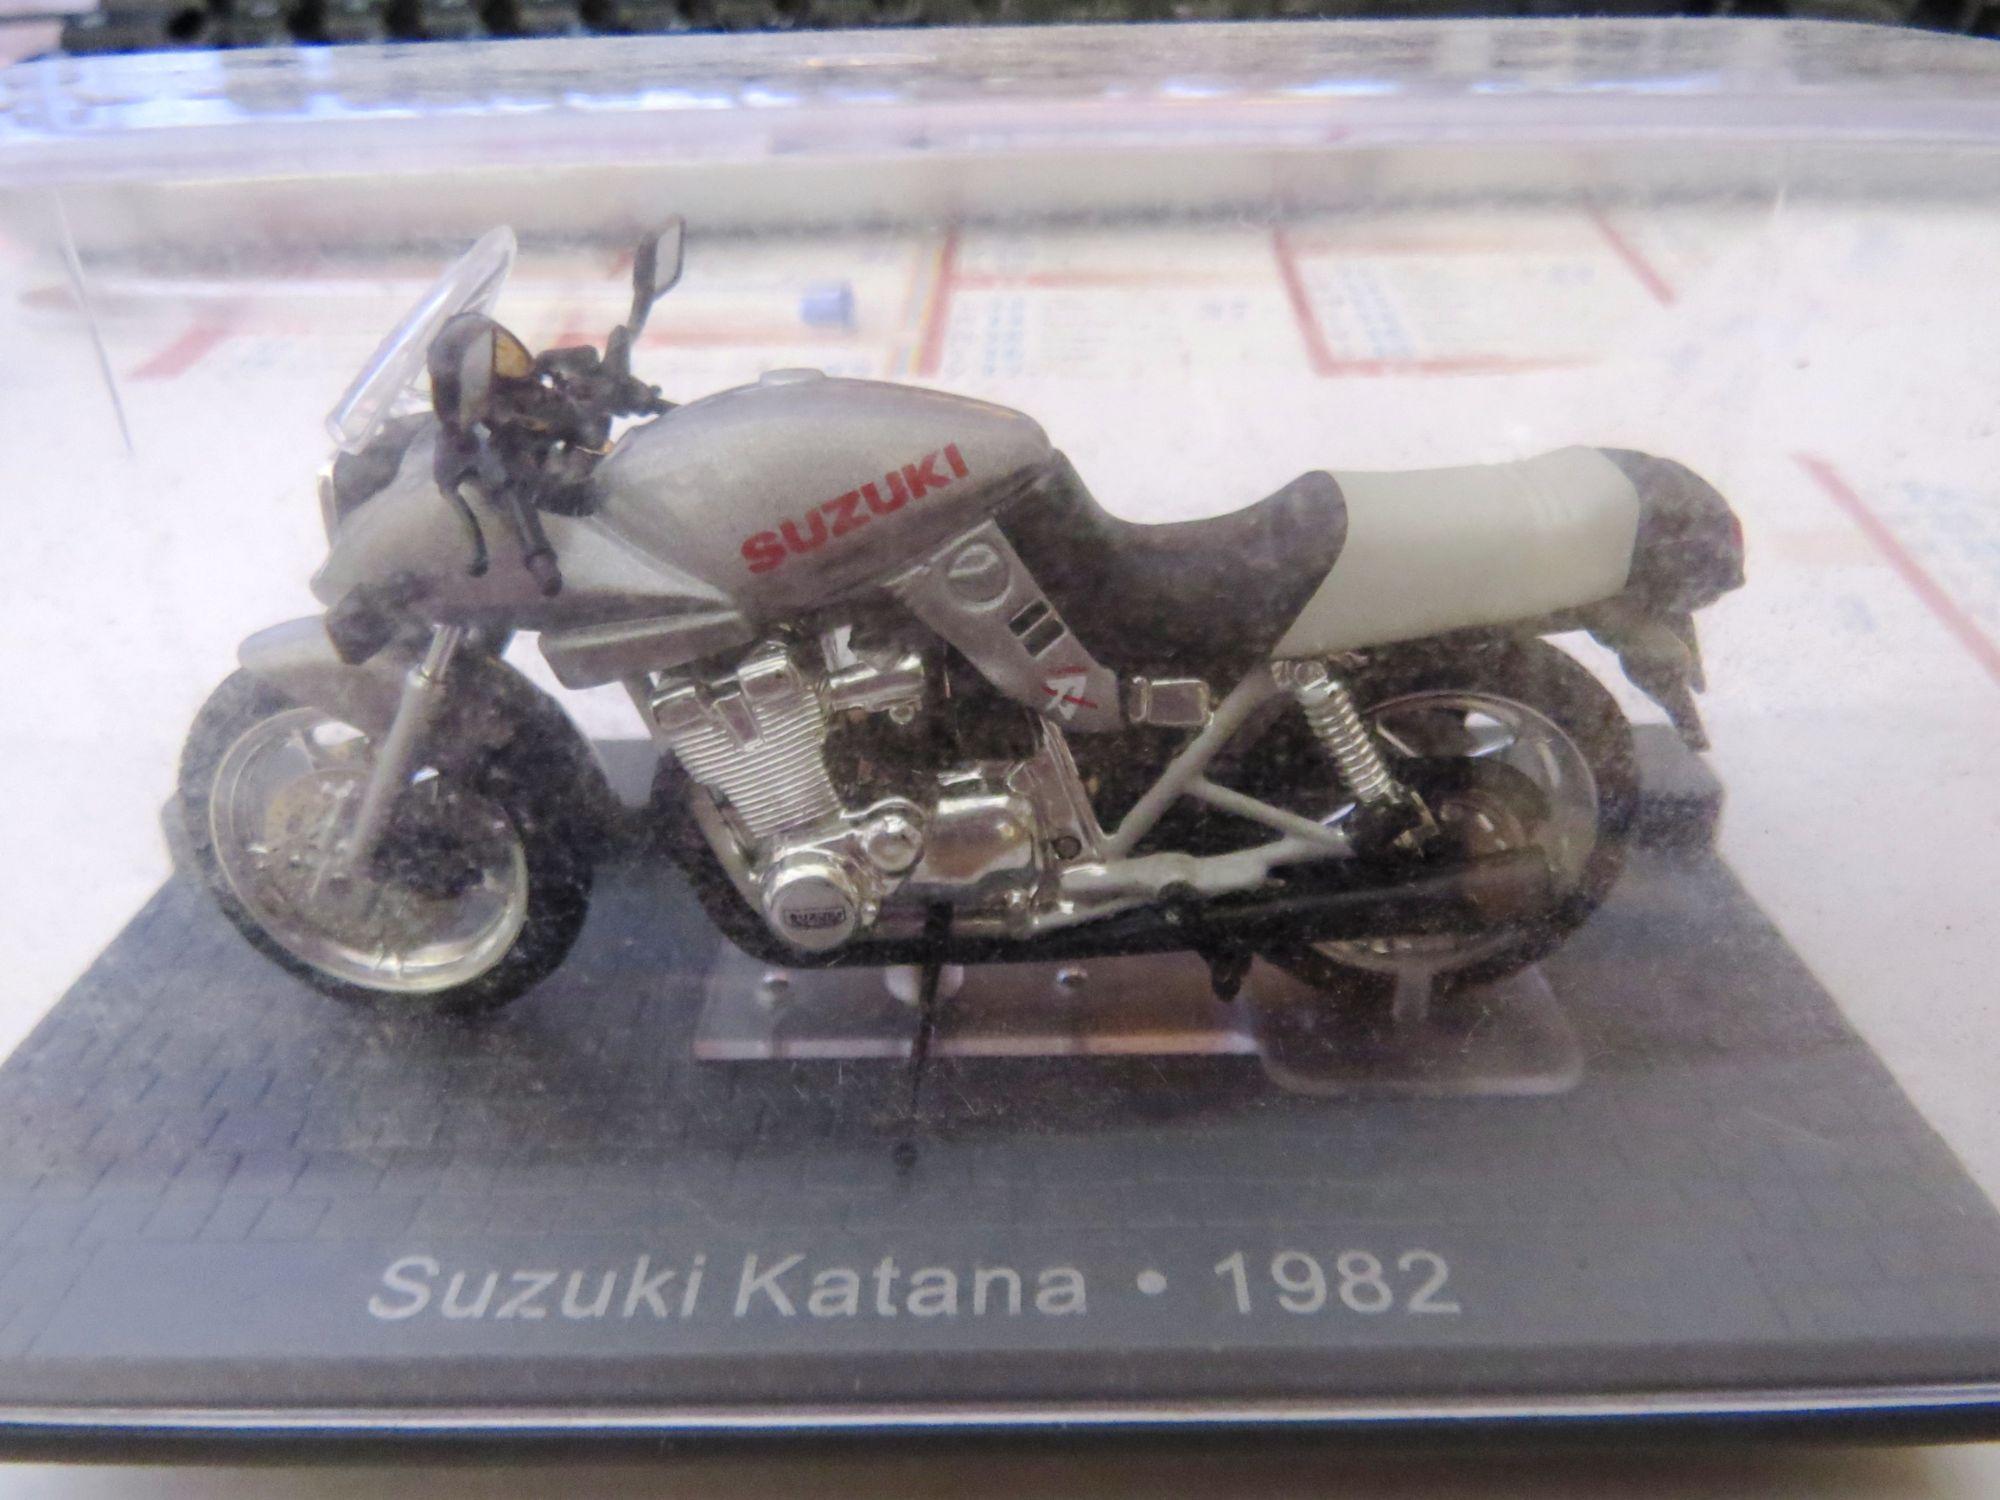 SUZUKI KATANA 1982 moto classic ATLAS 4658122 NEUF 1:24 neuf dans sa boîte hv2 μ * 